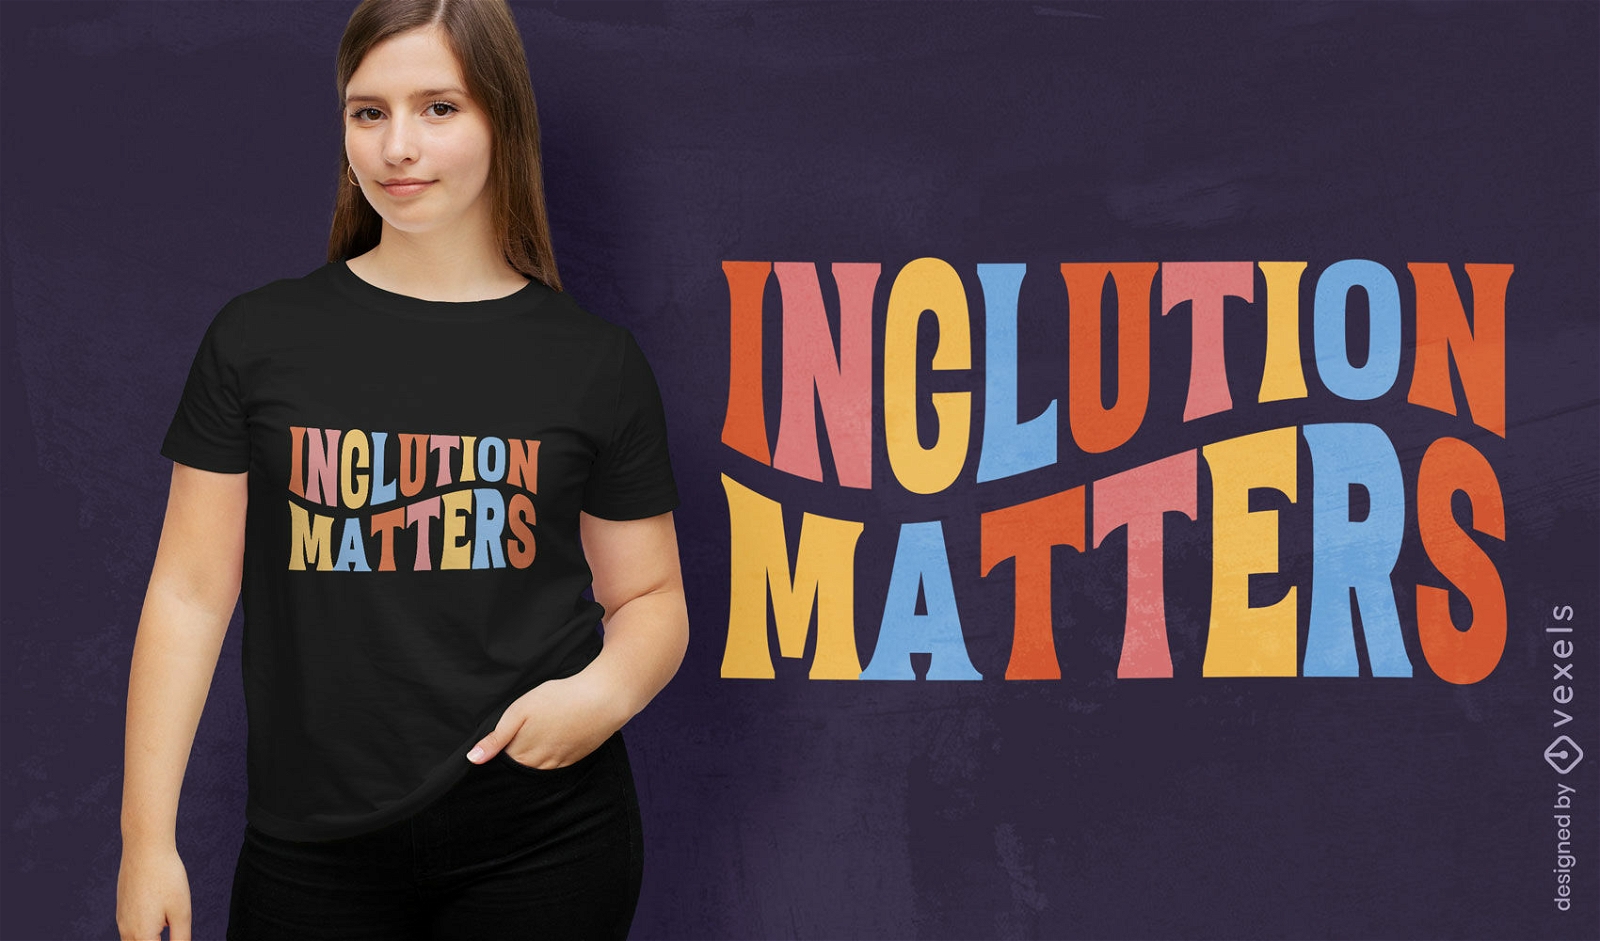 Inclusion matters t-shirt design